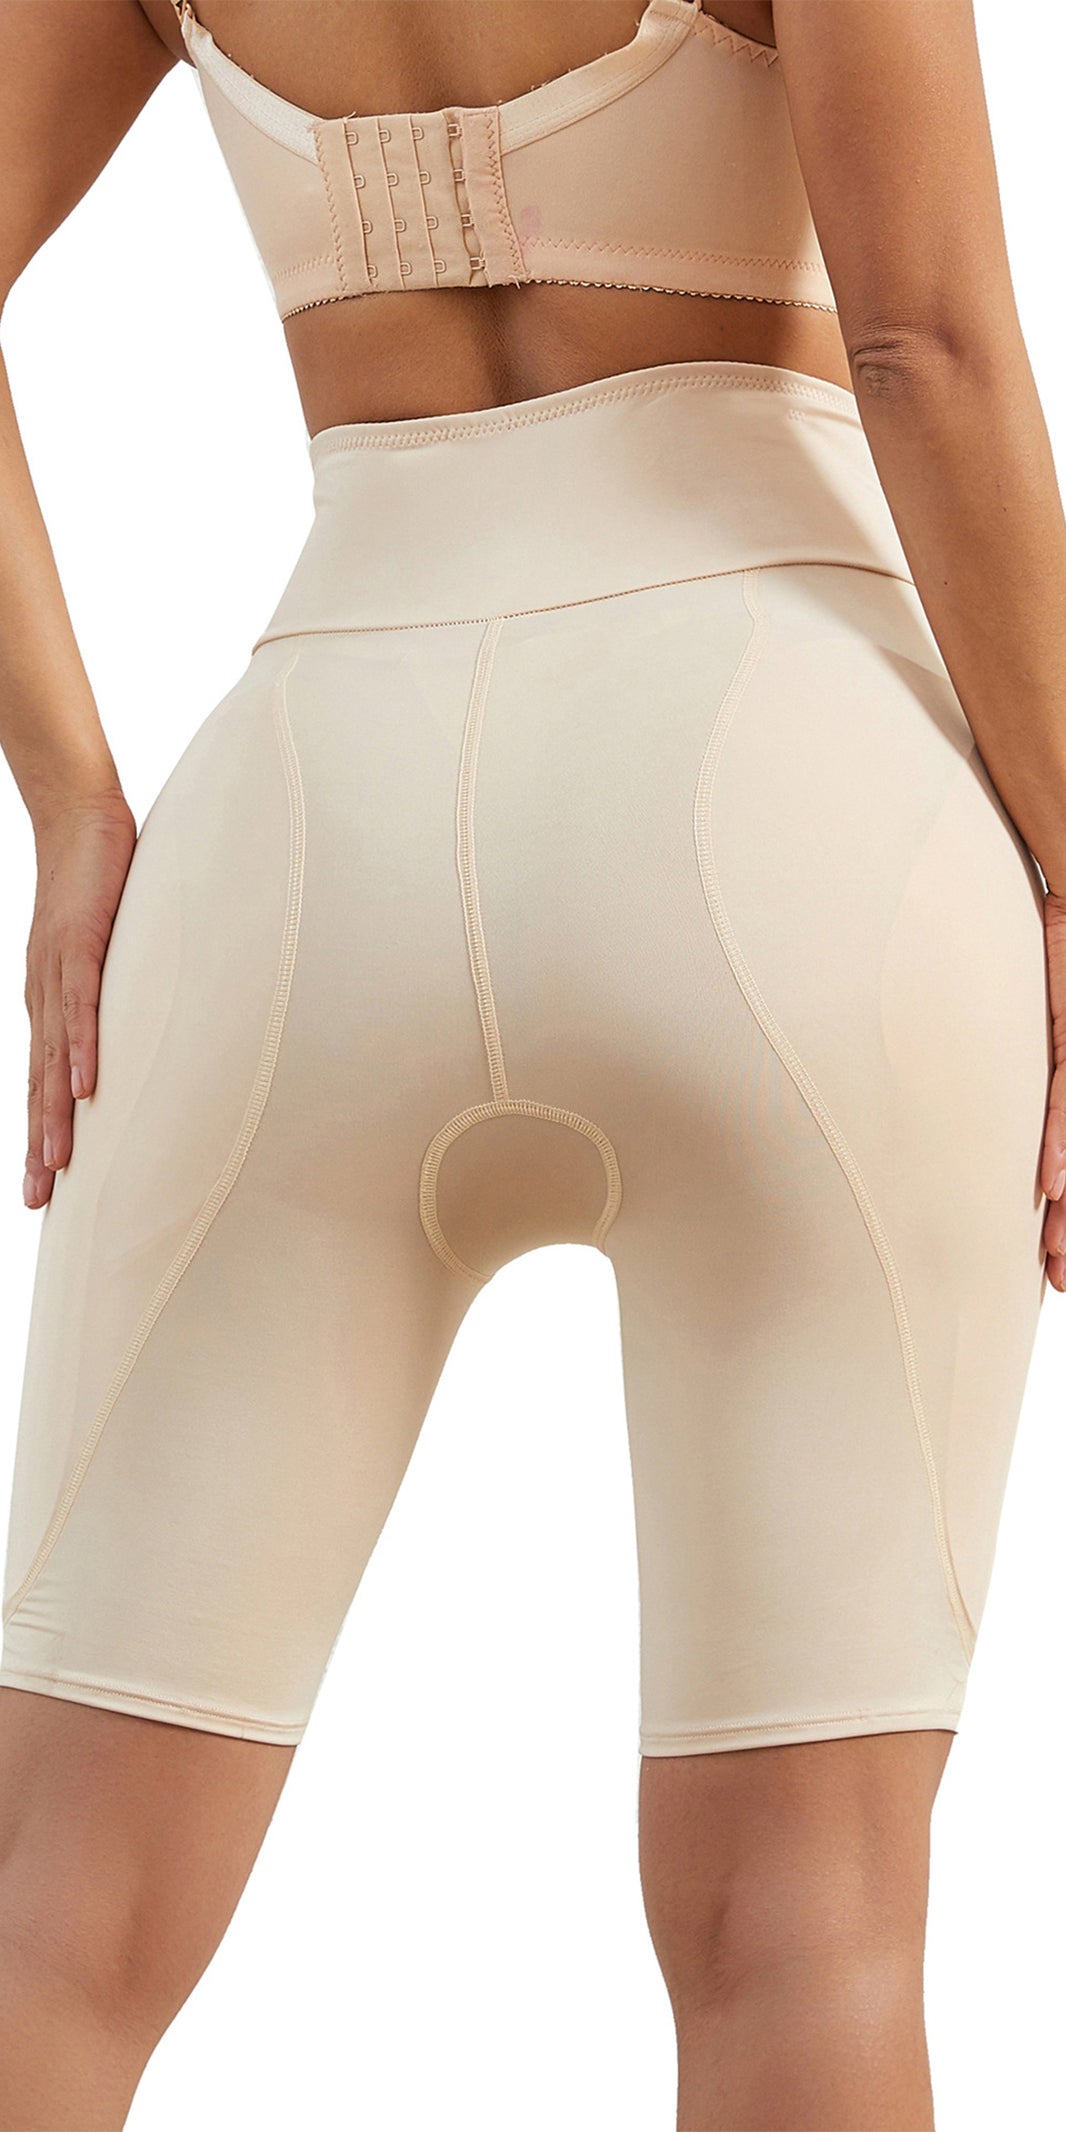 Buttoned Body Lift Fake Butt Sponge Padded Tummy Tuck Shaping Pants